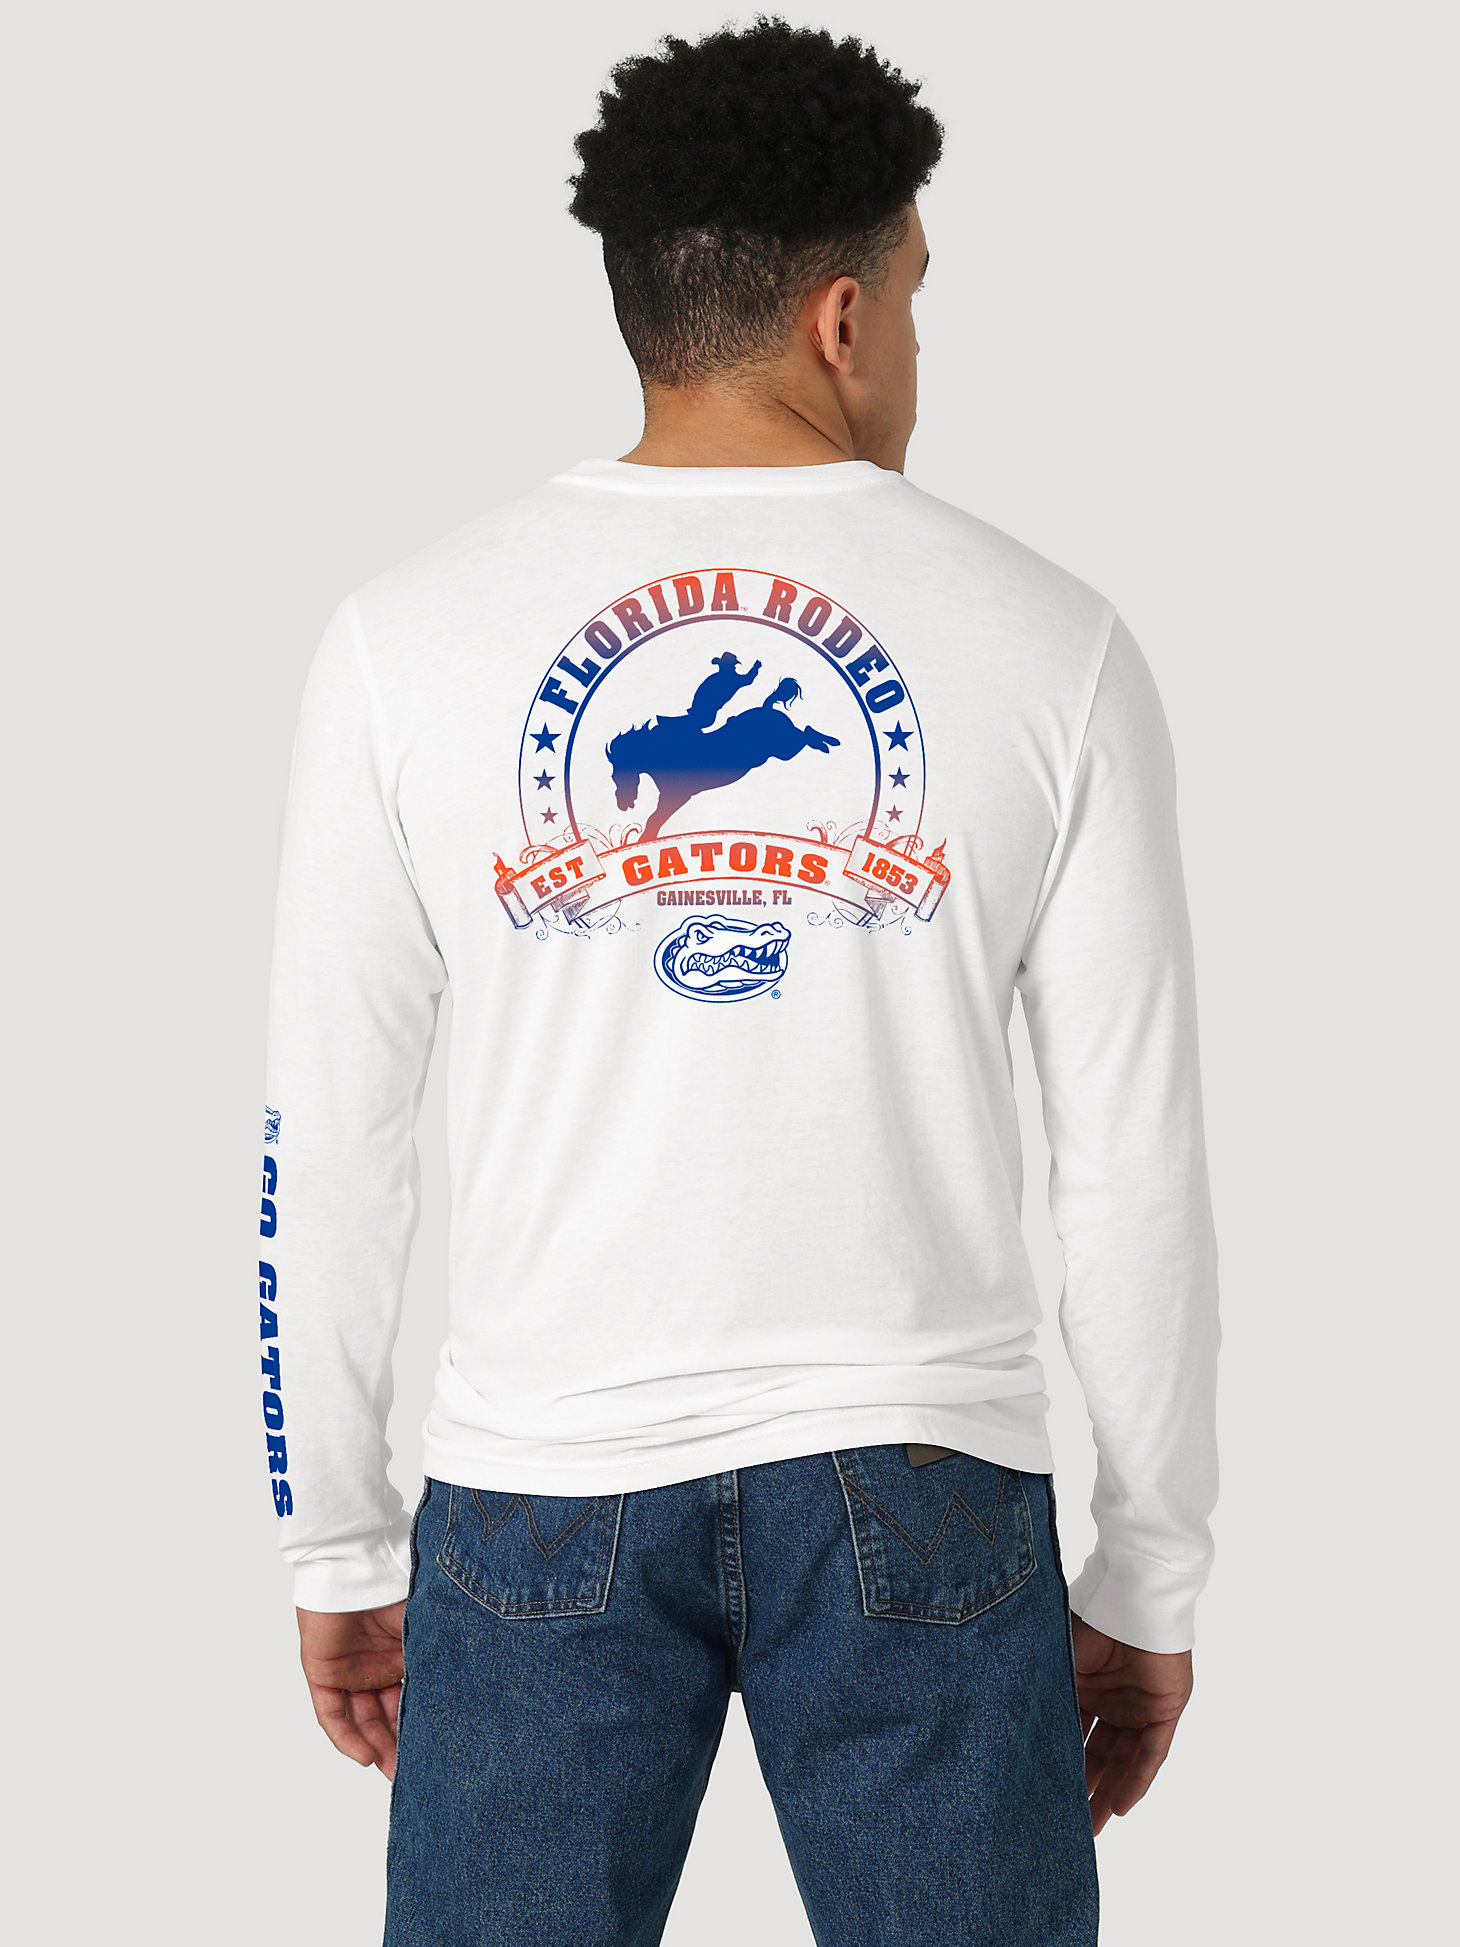 Wrangler Collegiate Rodeo Long Sleeve T-Shirt in University of Florida main view